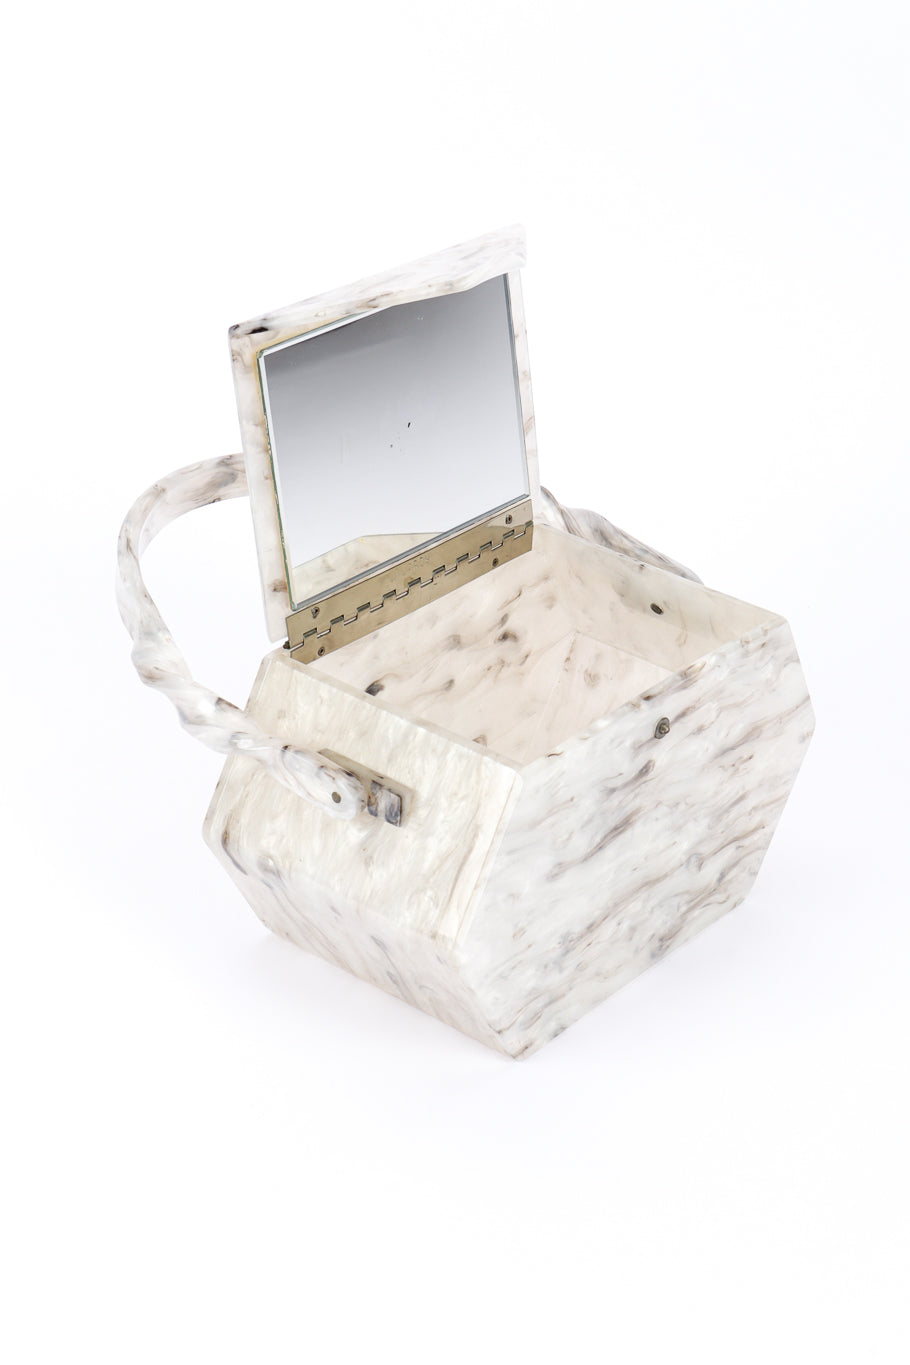 Vintage Wilardy Marbled Pearl Lucite Box Bag 3/4 front open lid @recessla